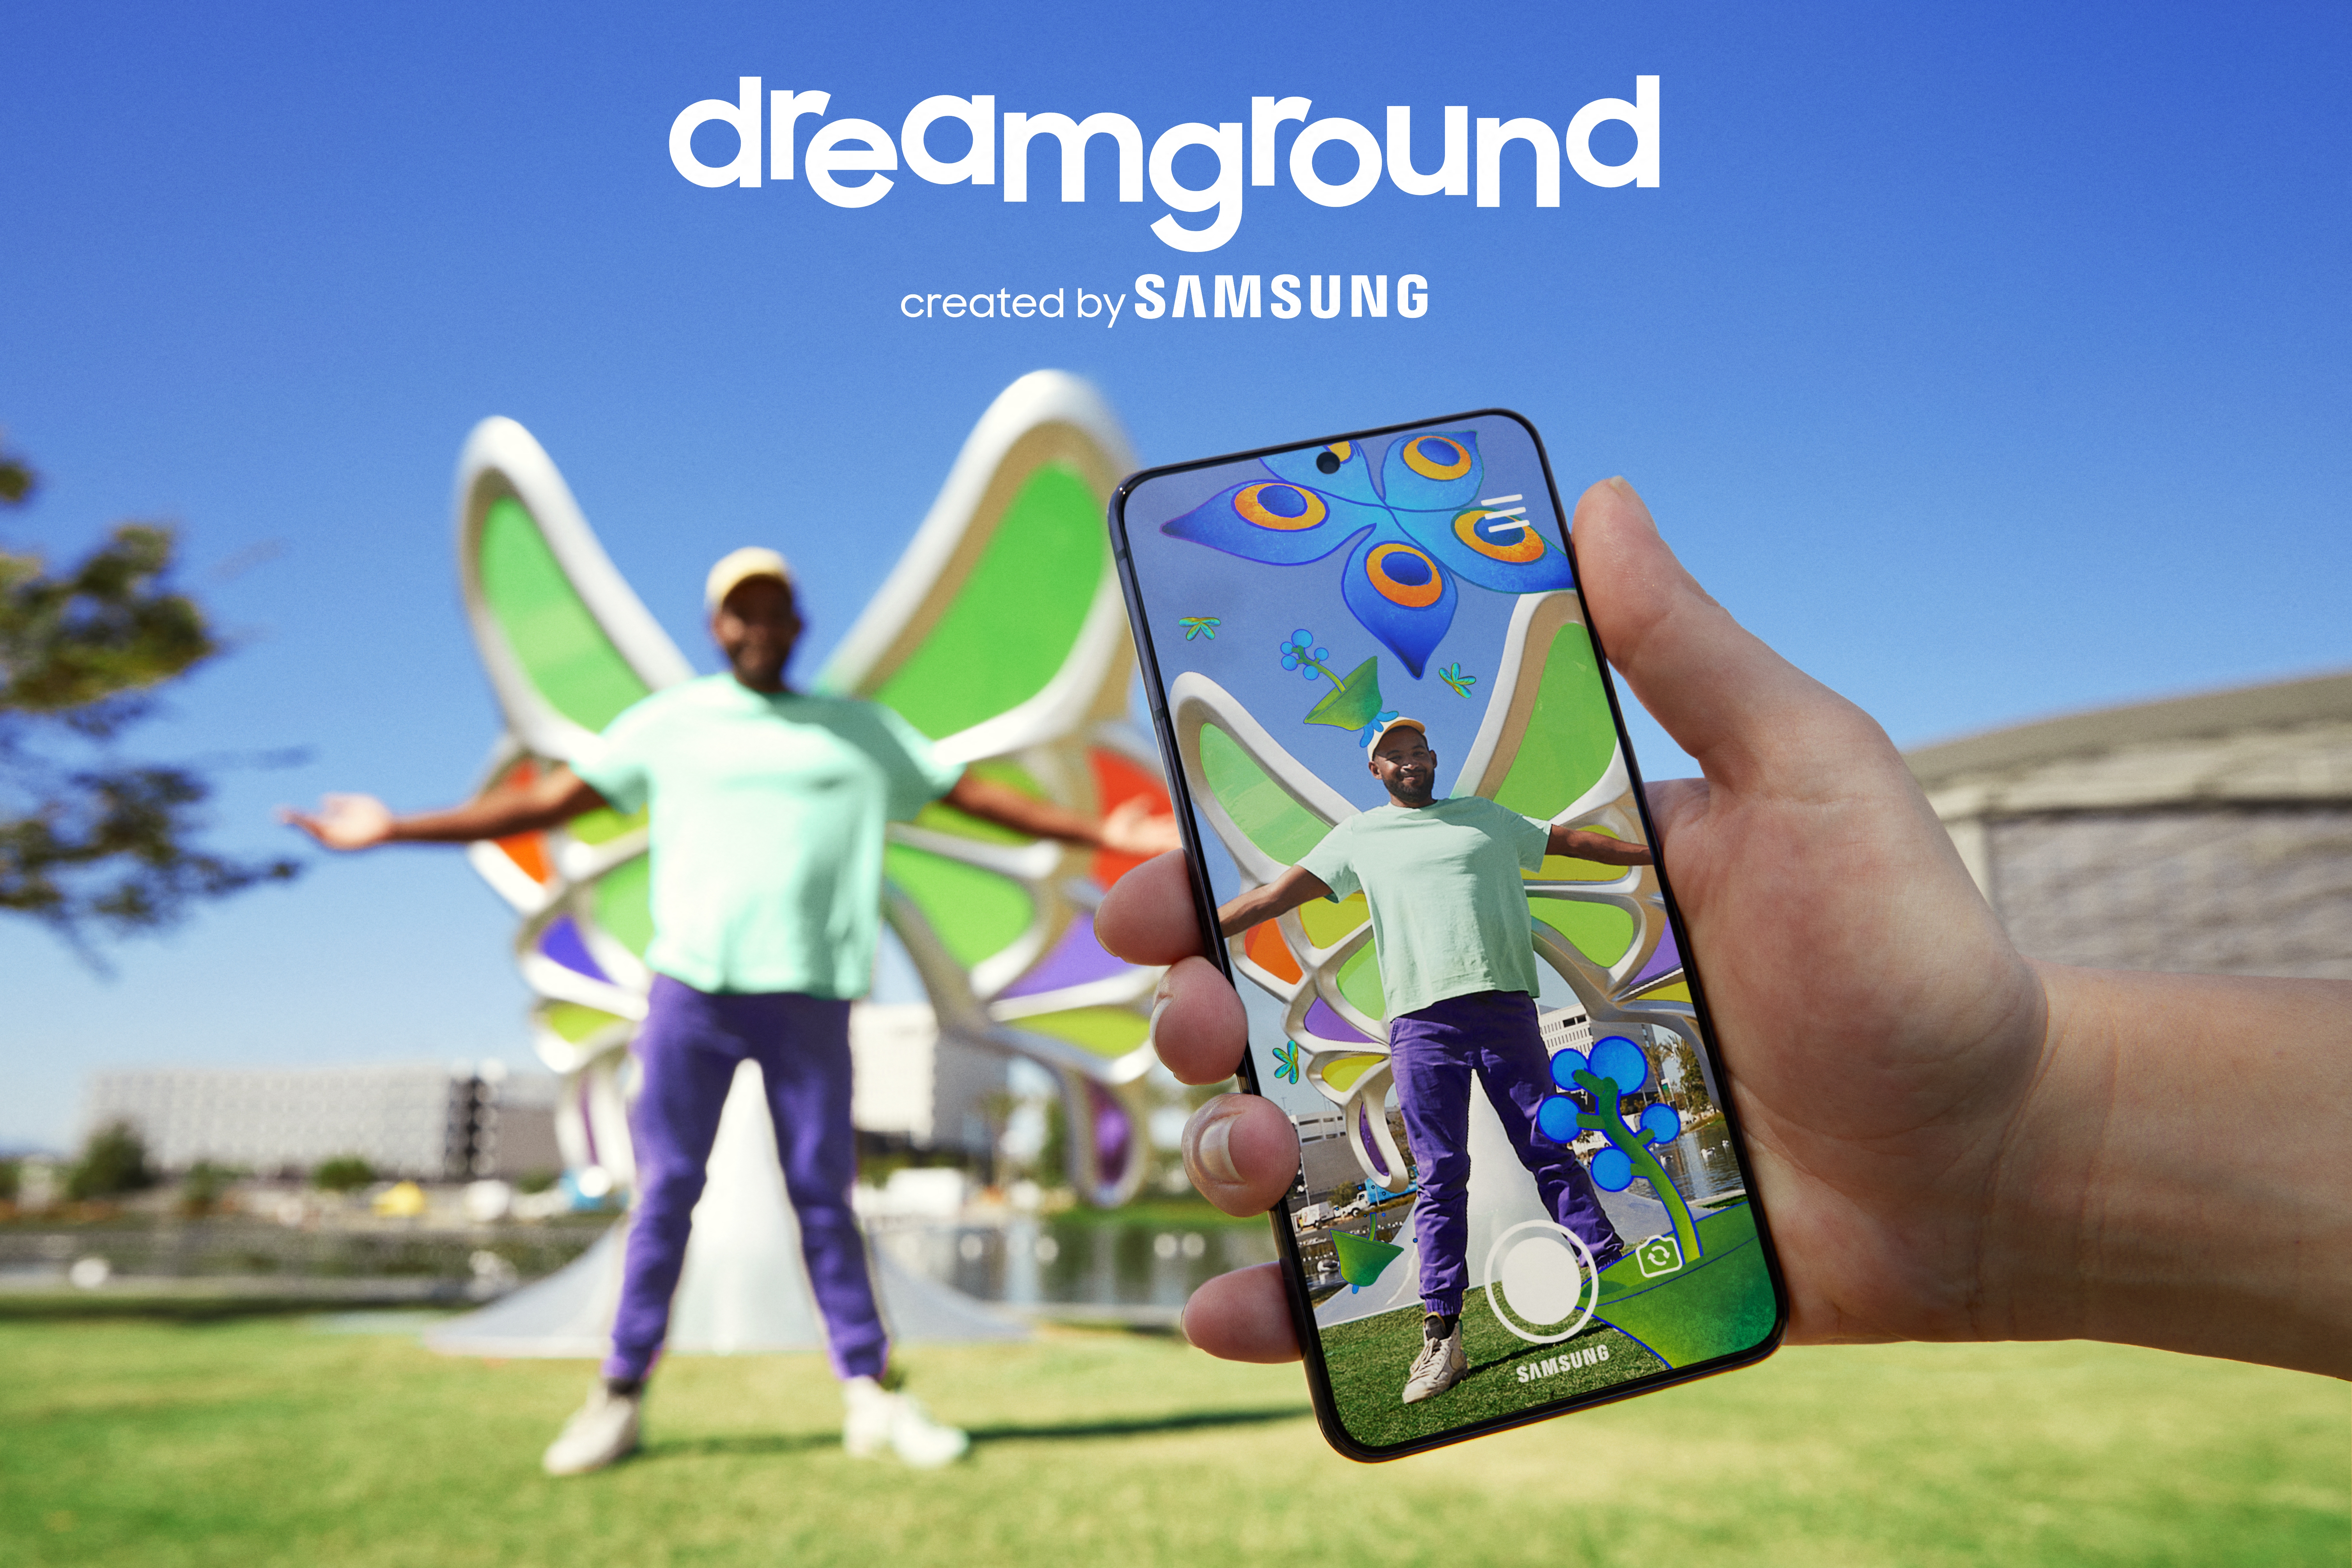 Samsung Dreamground AR